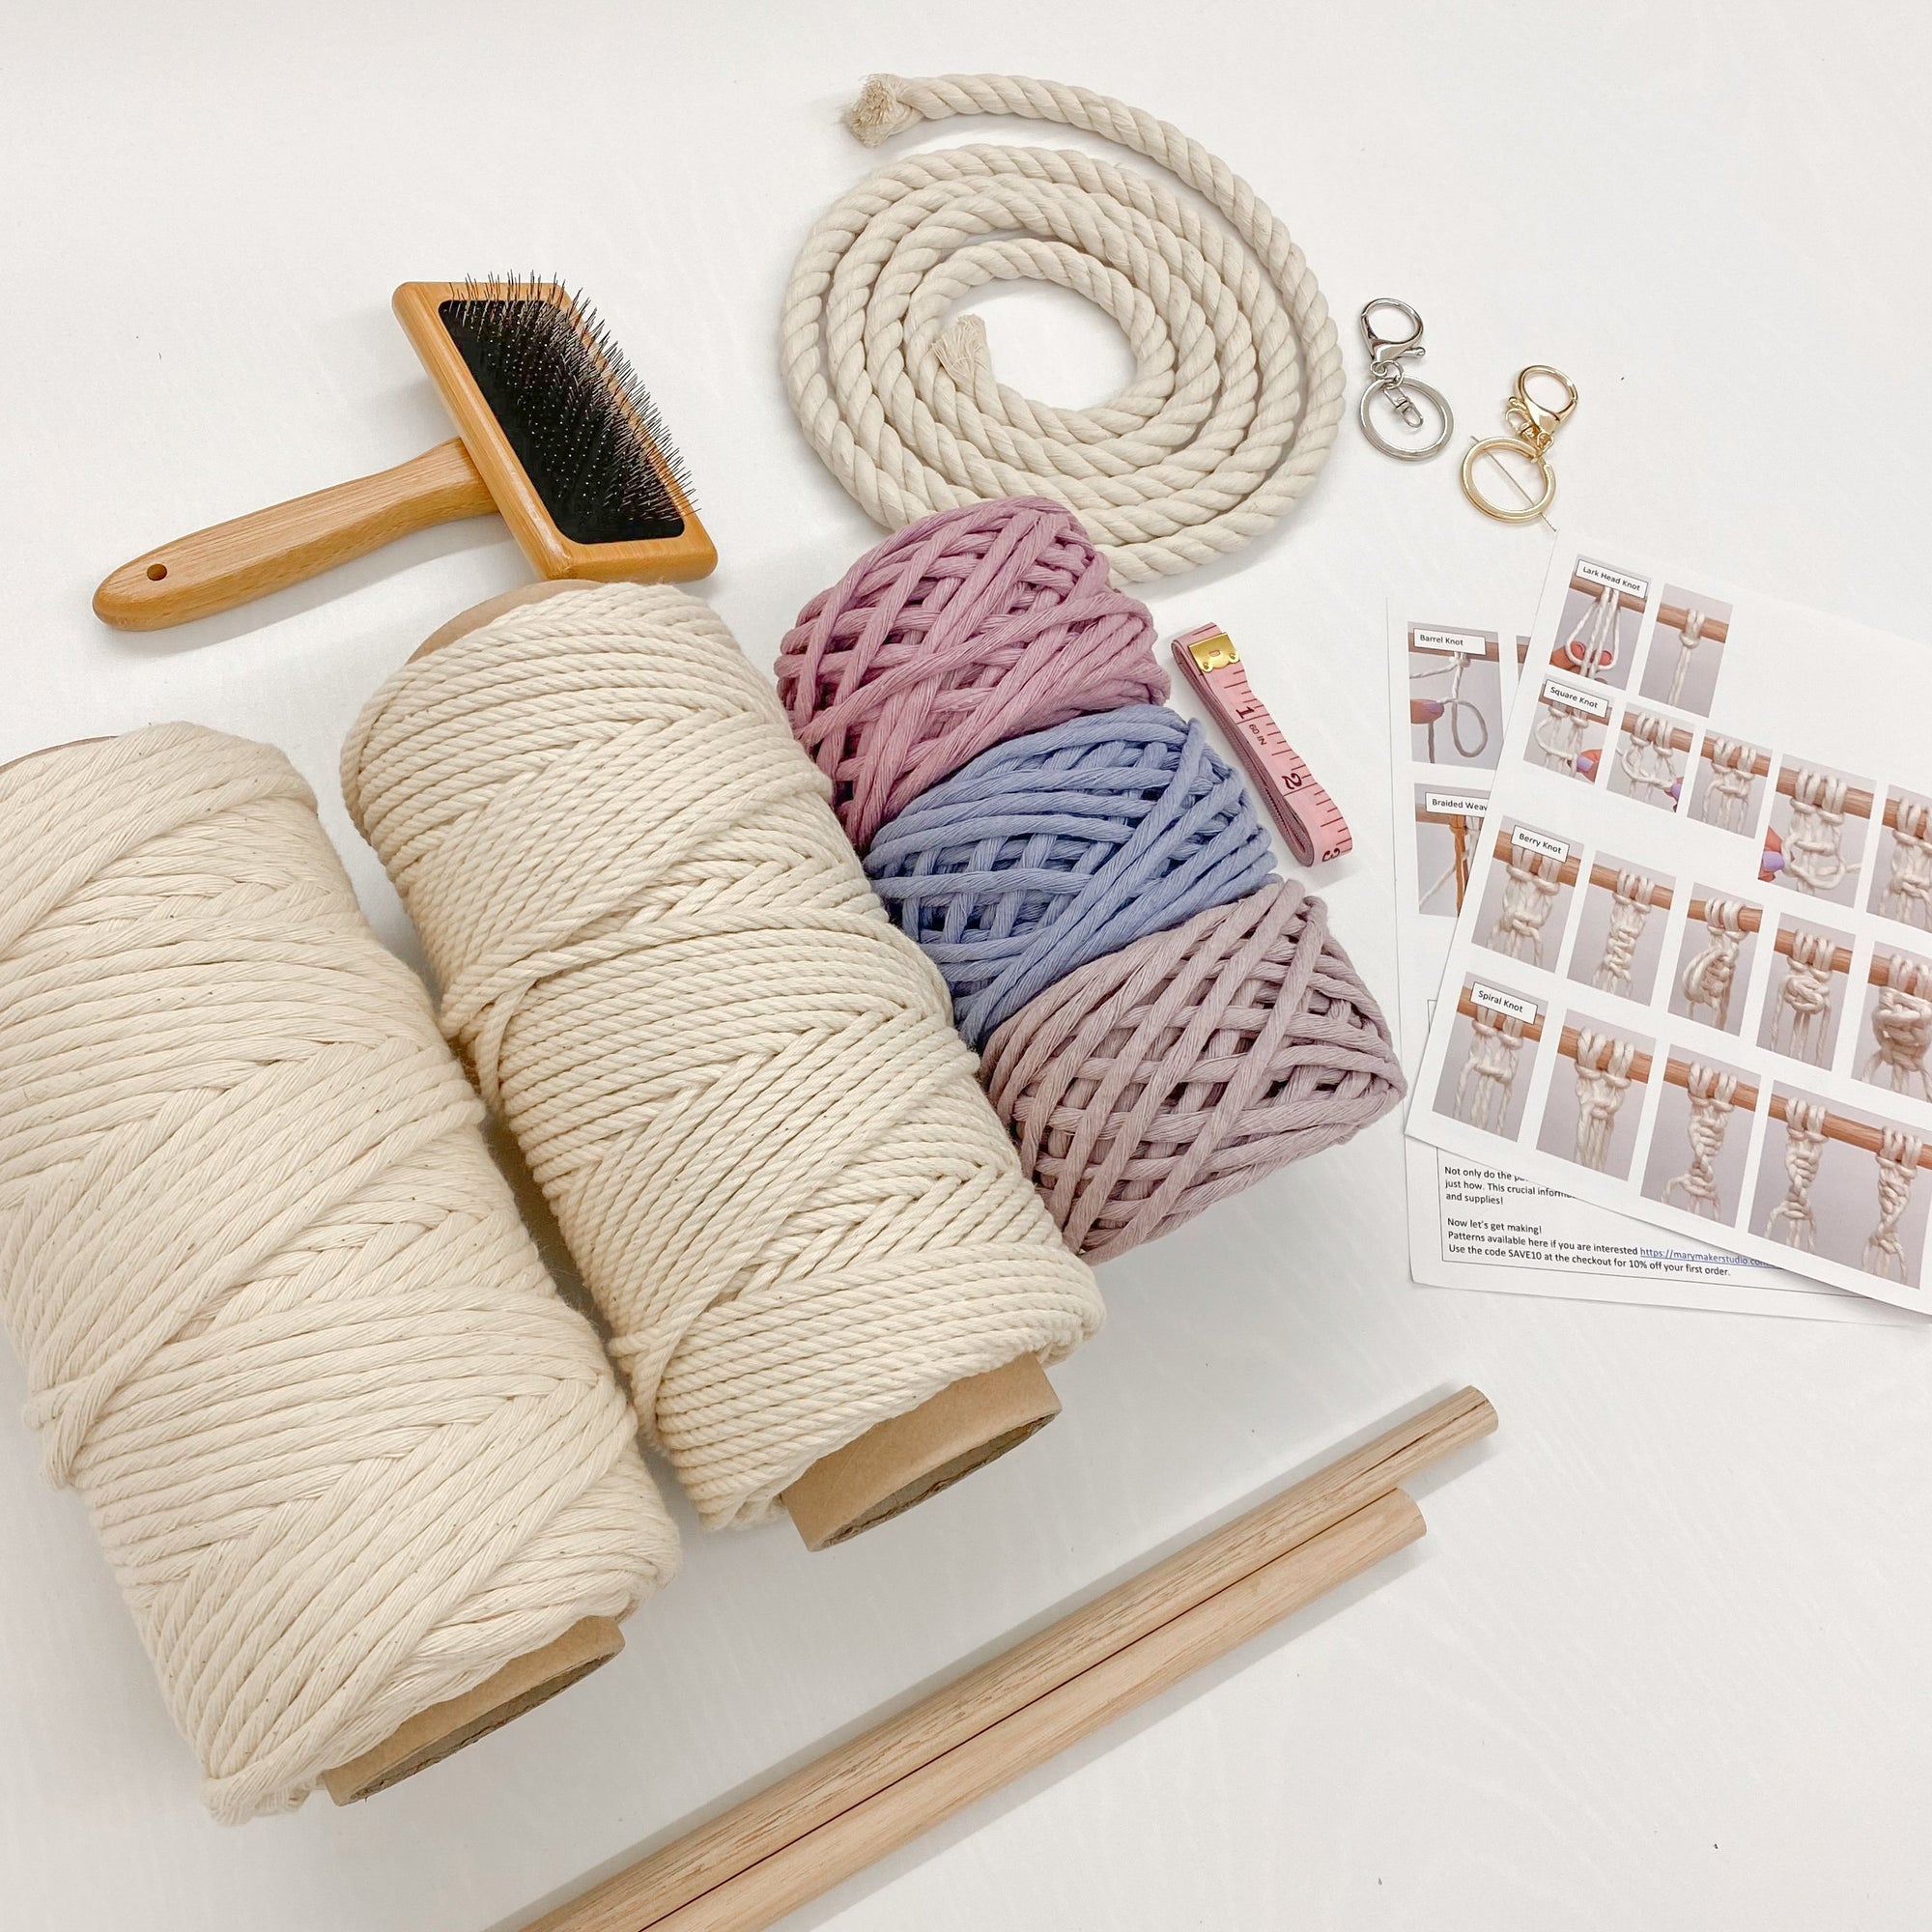 Raffia - Mary Maker Studio - Macrame & Weaving Supplies and Education.